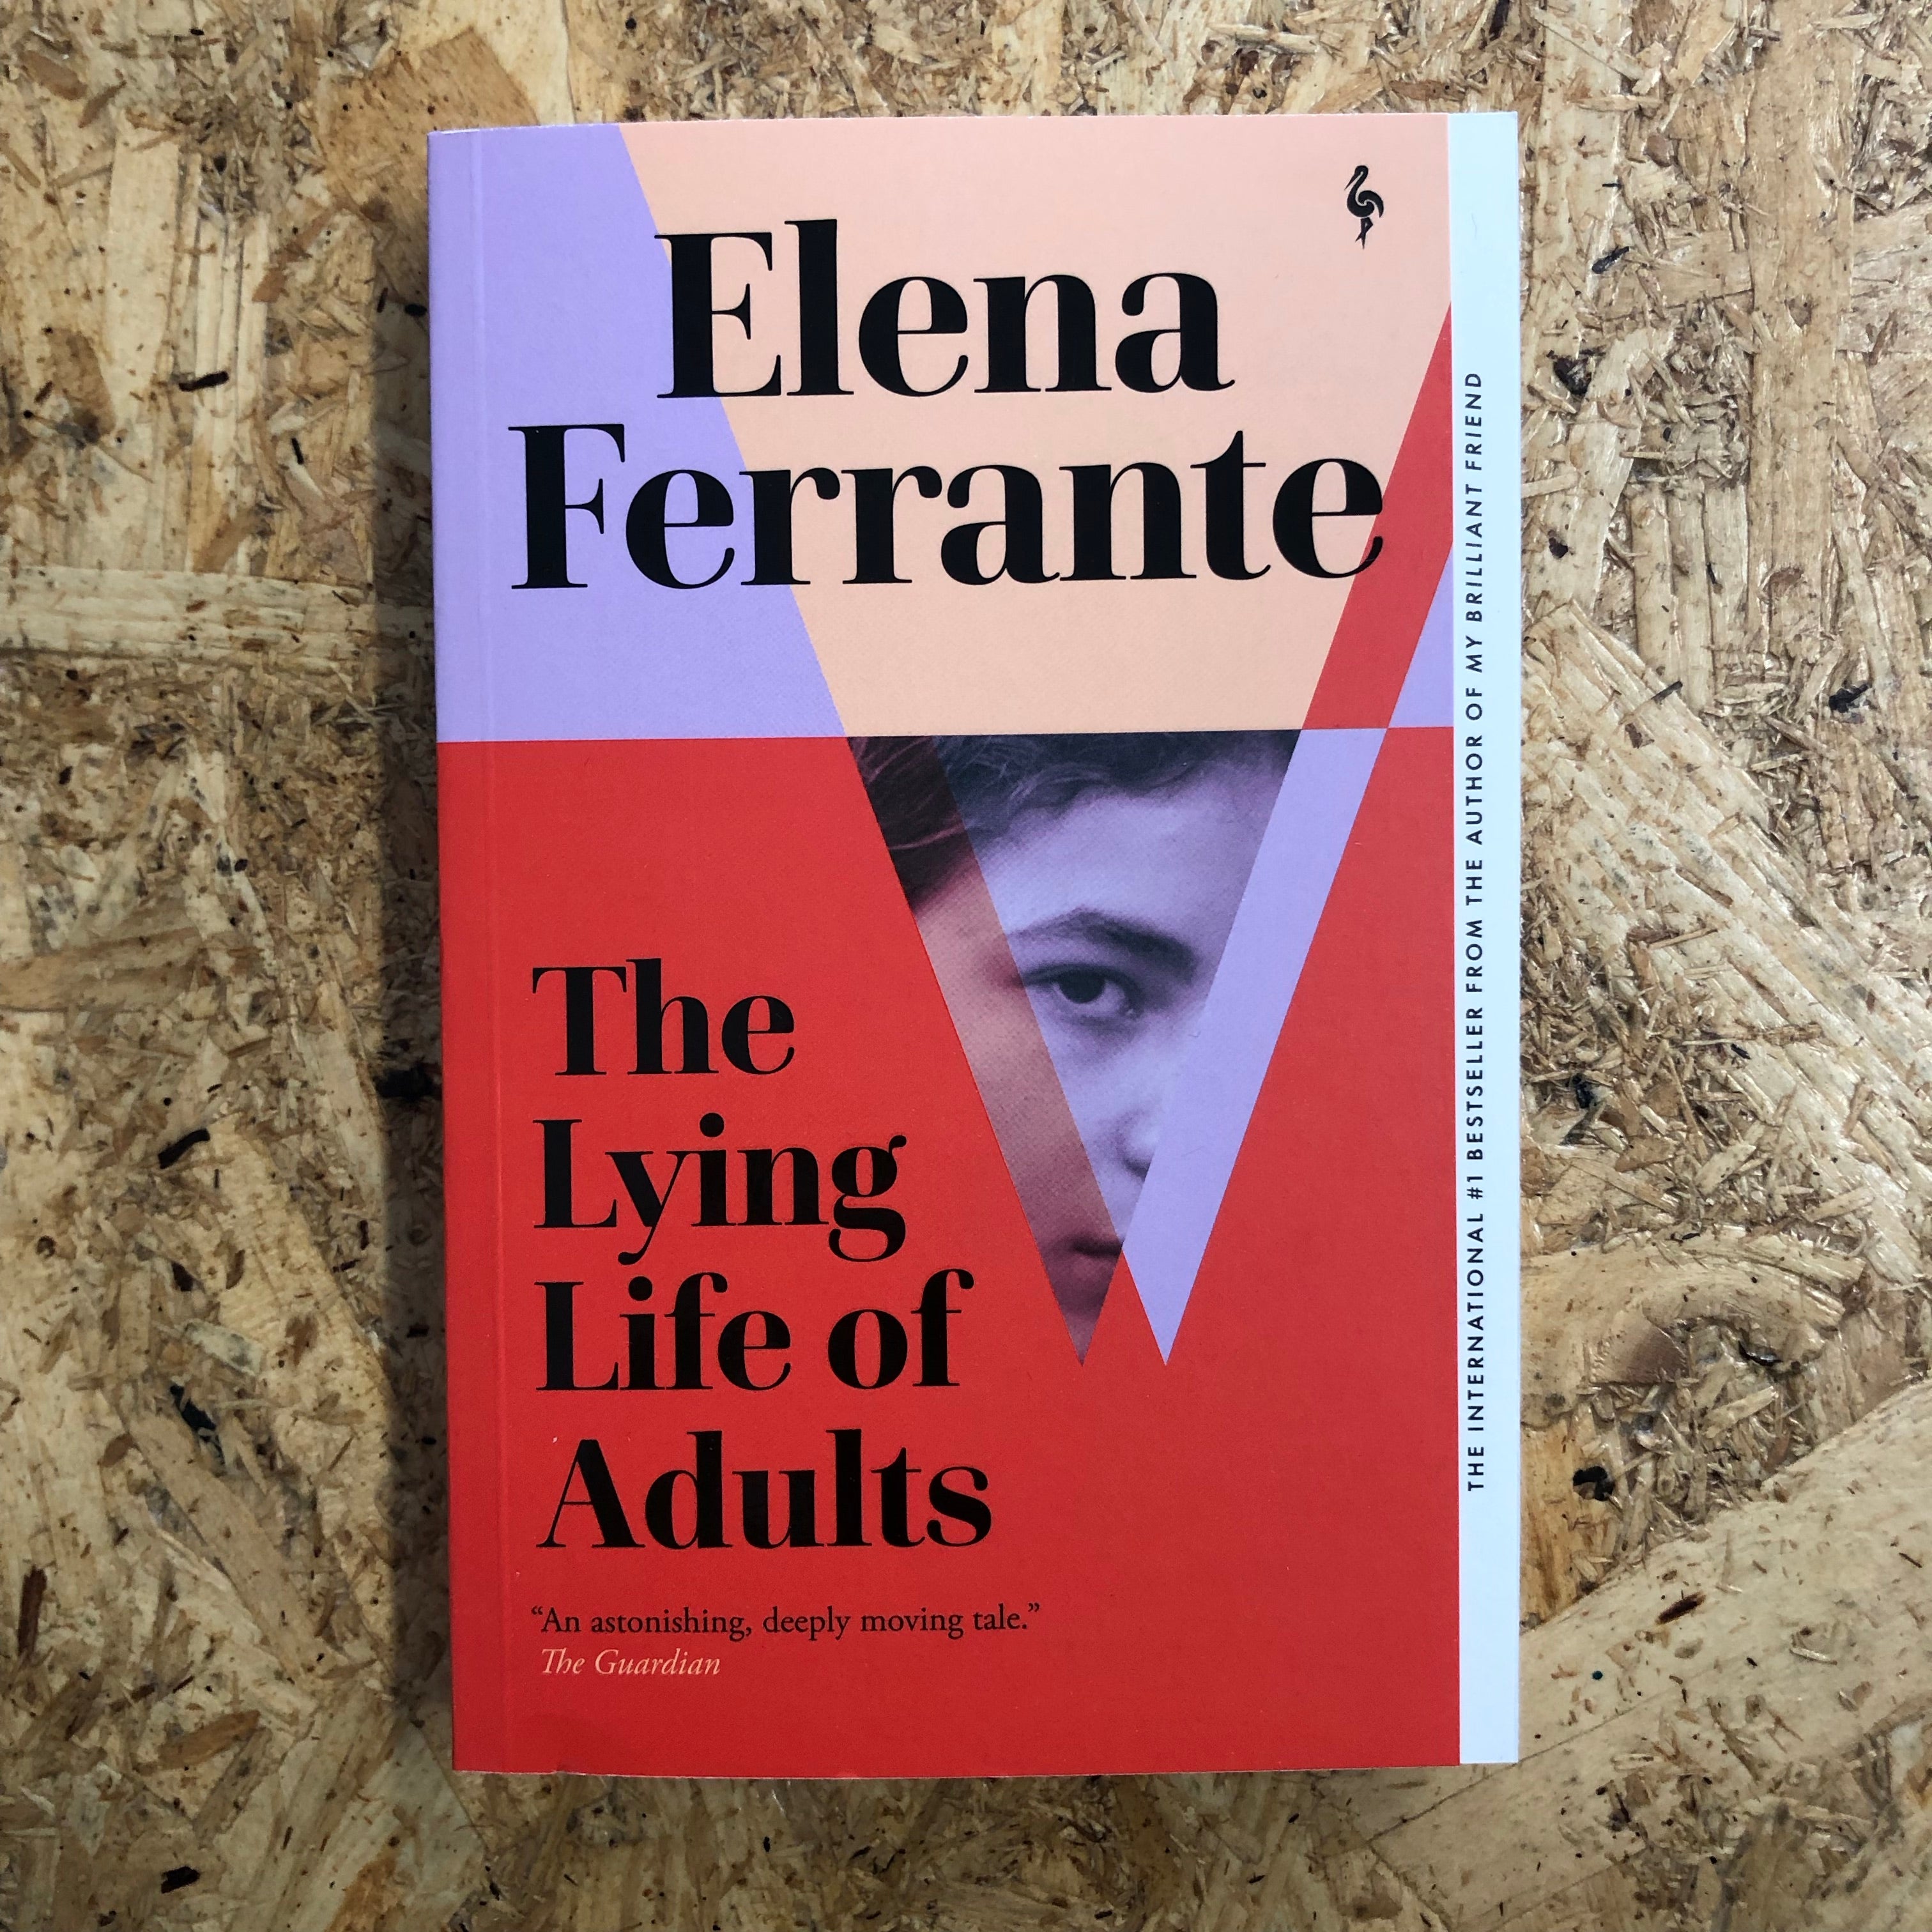 Adults　Of　Pigeon　Elena　The　Books　Ferrante　Lying　Life　–